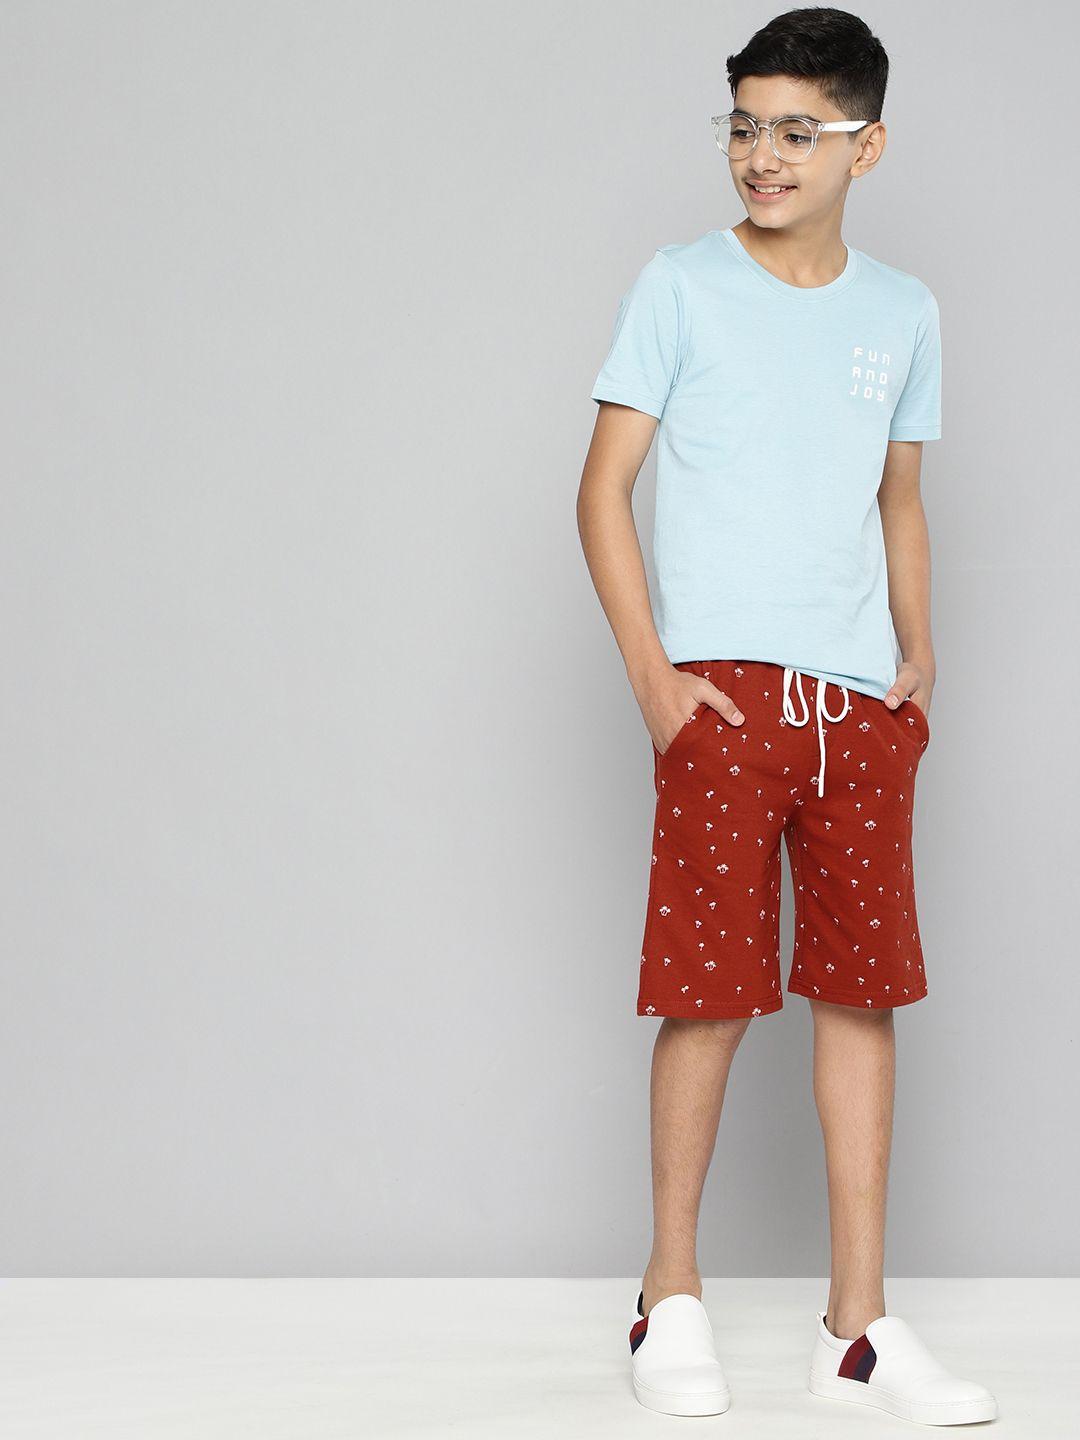 m&h juniors boys brown conversational printed shorts